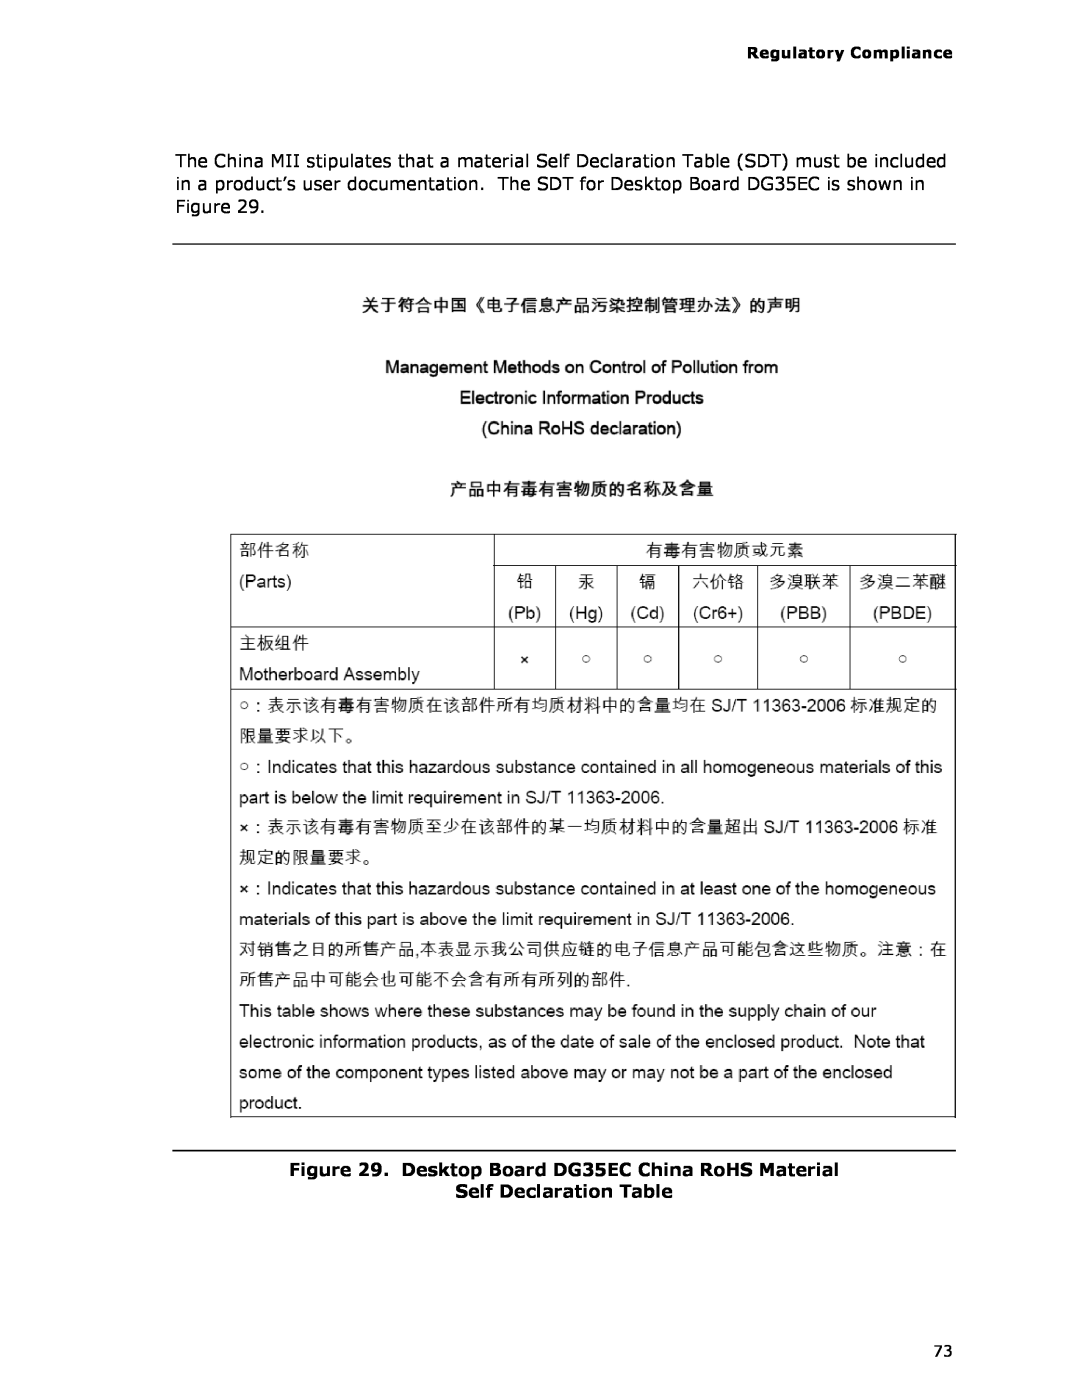 Intel Intel Desktop Board manual Desktop Board DG35EC China RoHS Material, Self Declaration Table 